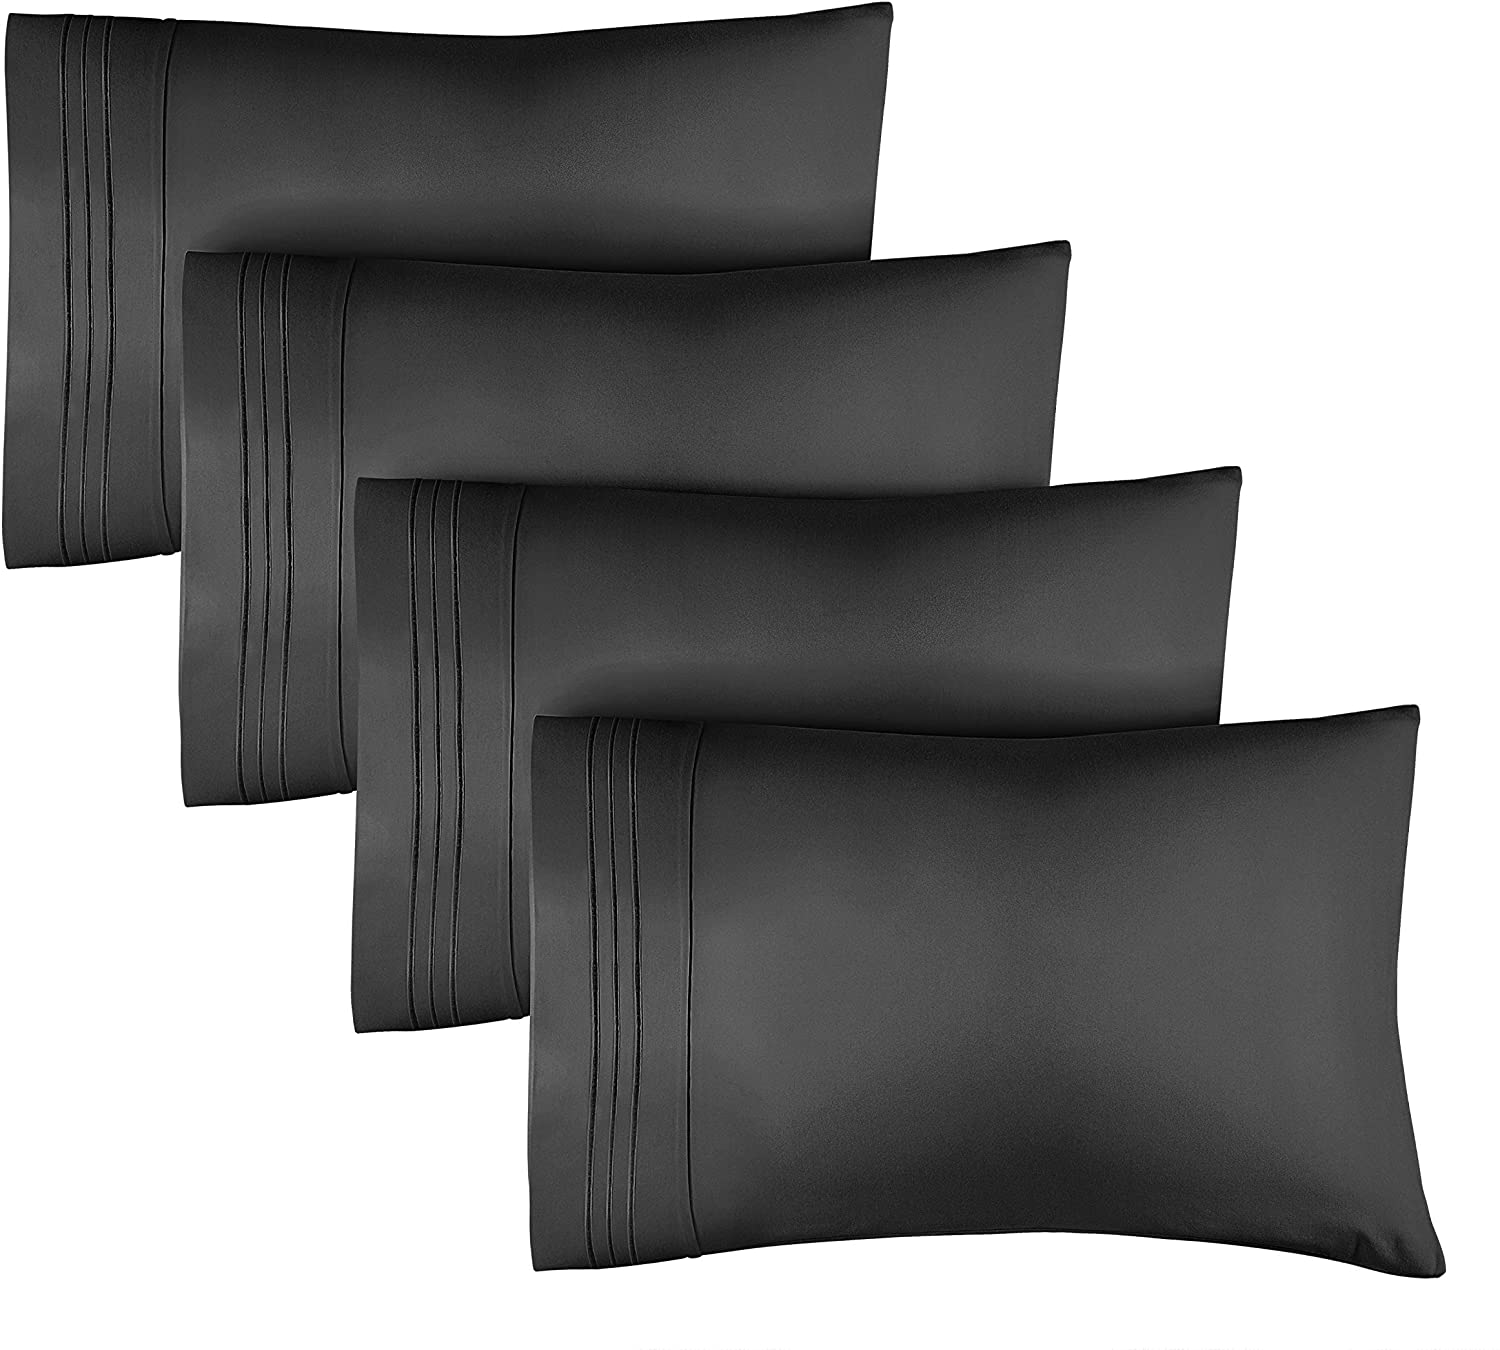 4 Pillowcase Set - Black